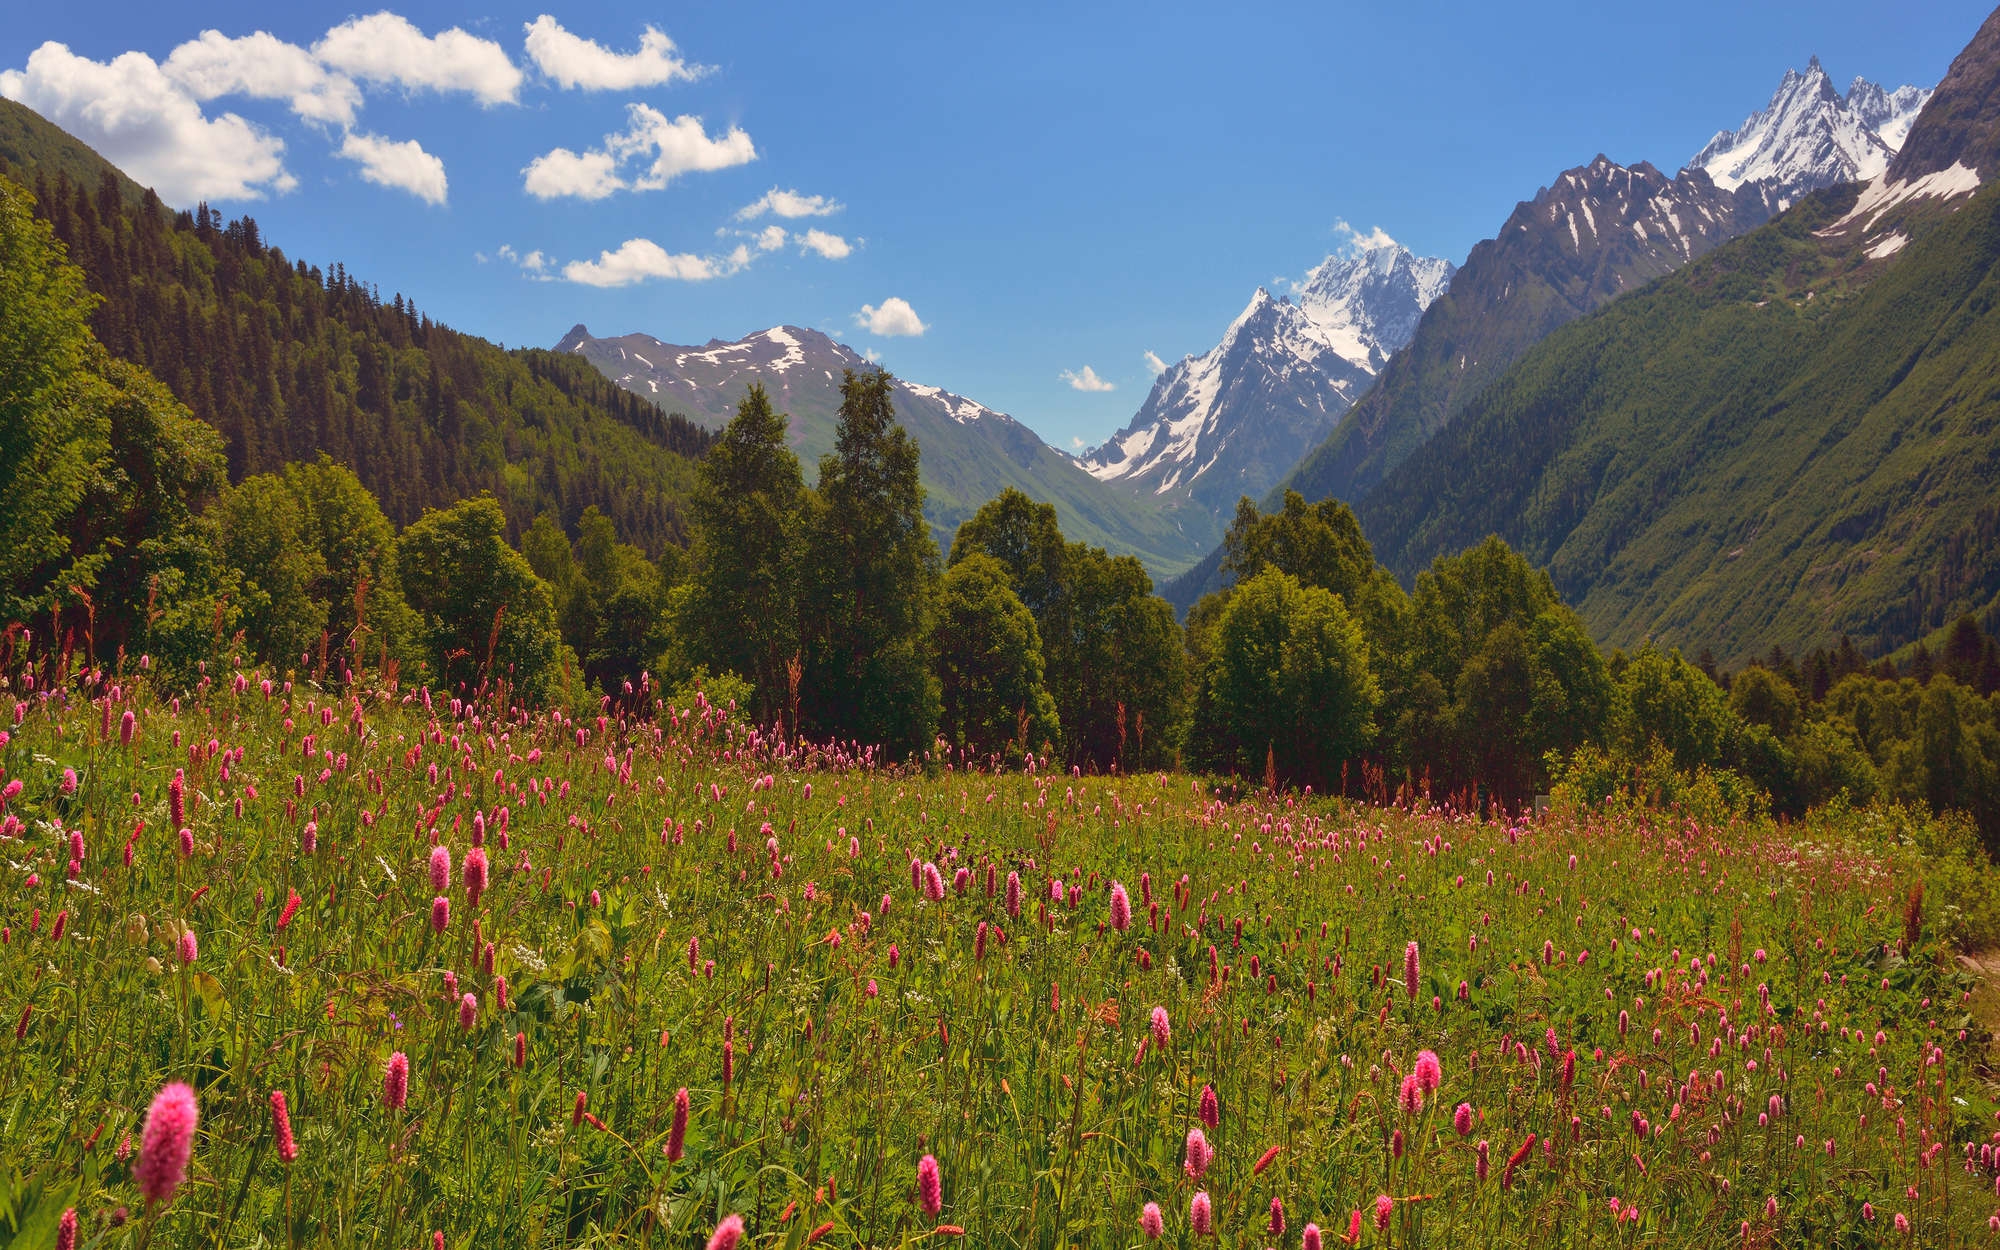             Nature Wallpaper Meadow and Mountain Landscape - Matt Smooth Non-woven
        